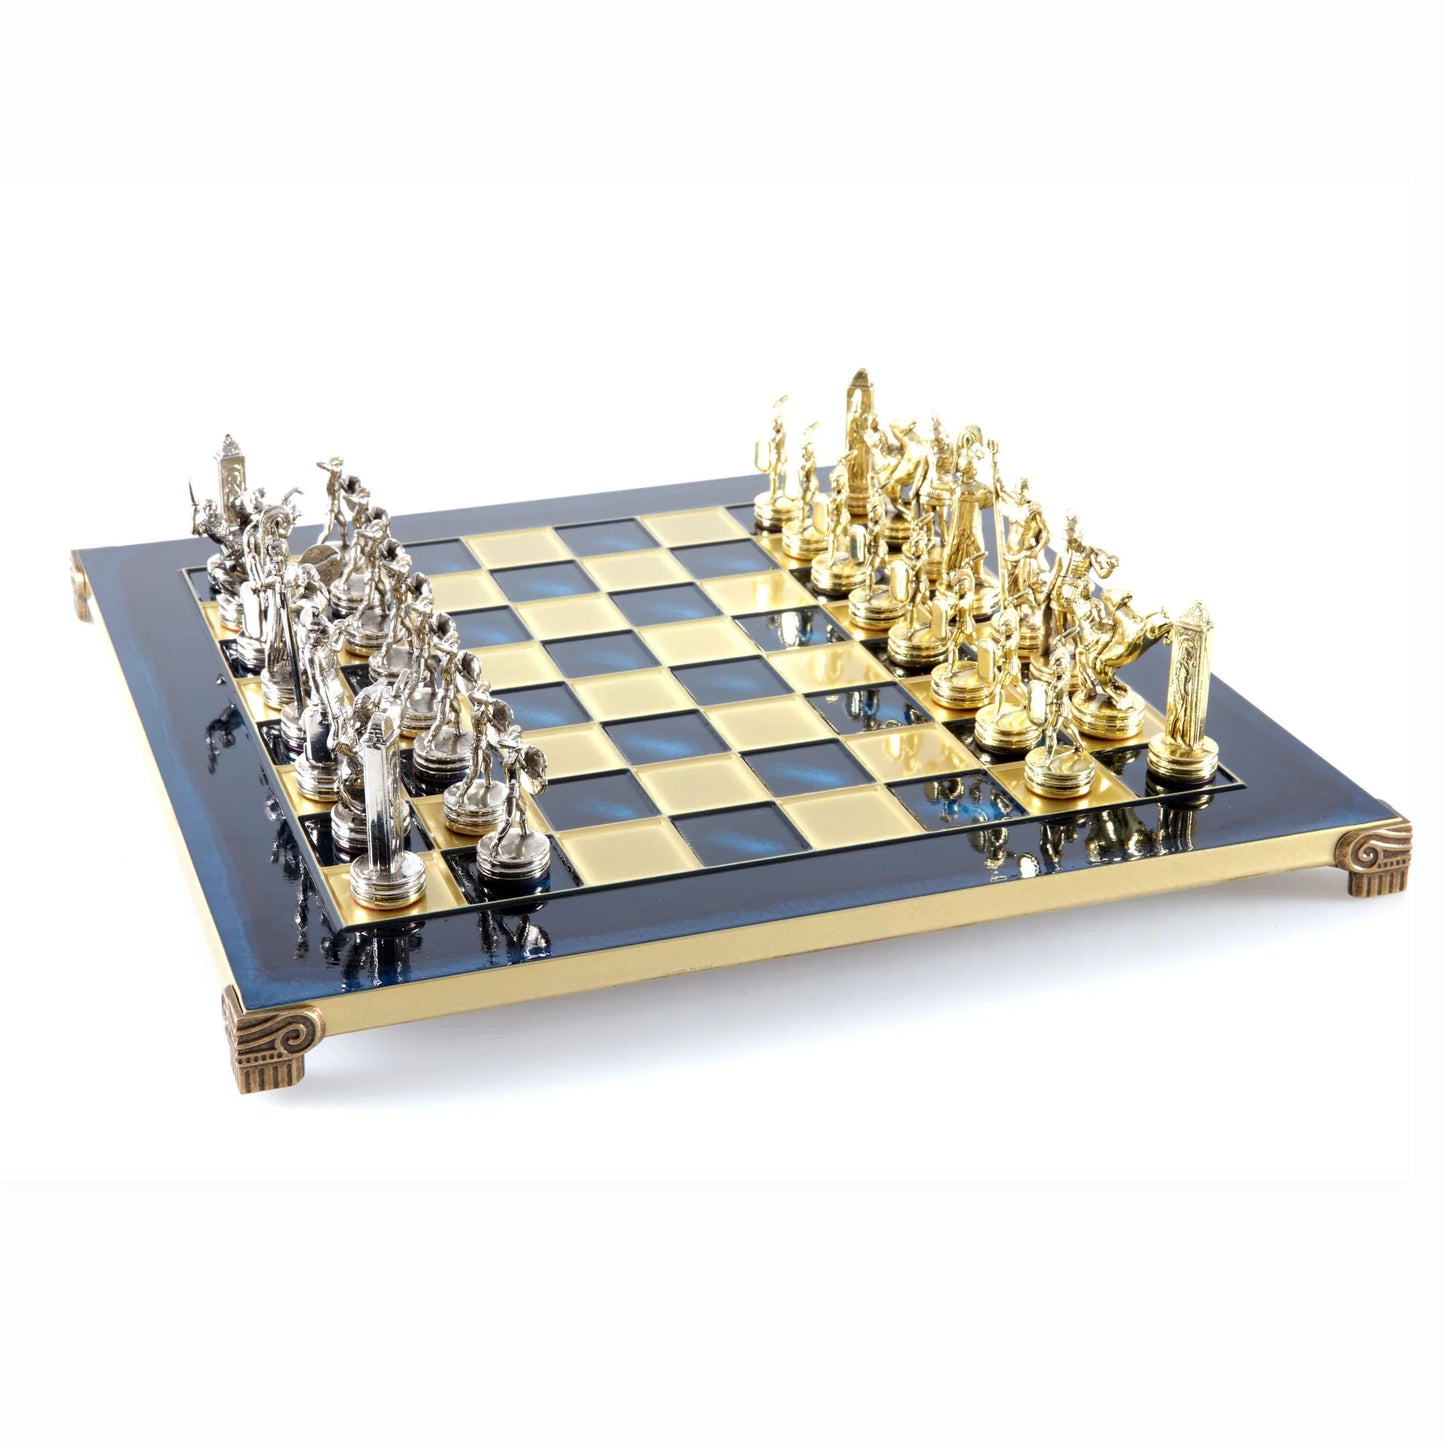 Greek Mythology Chess Set 36x36cm